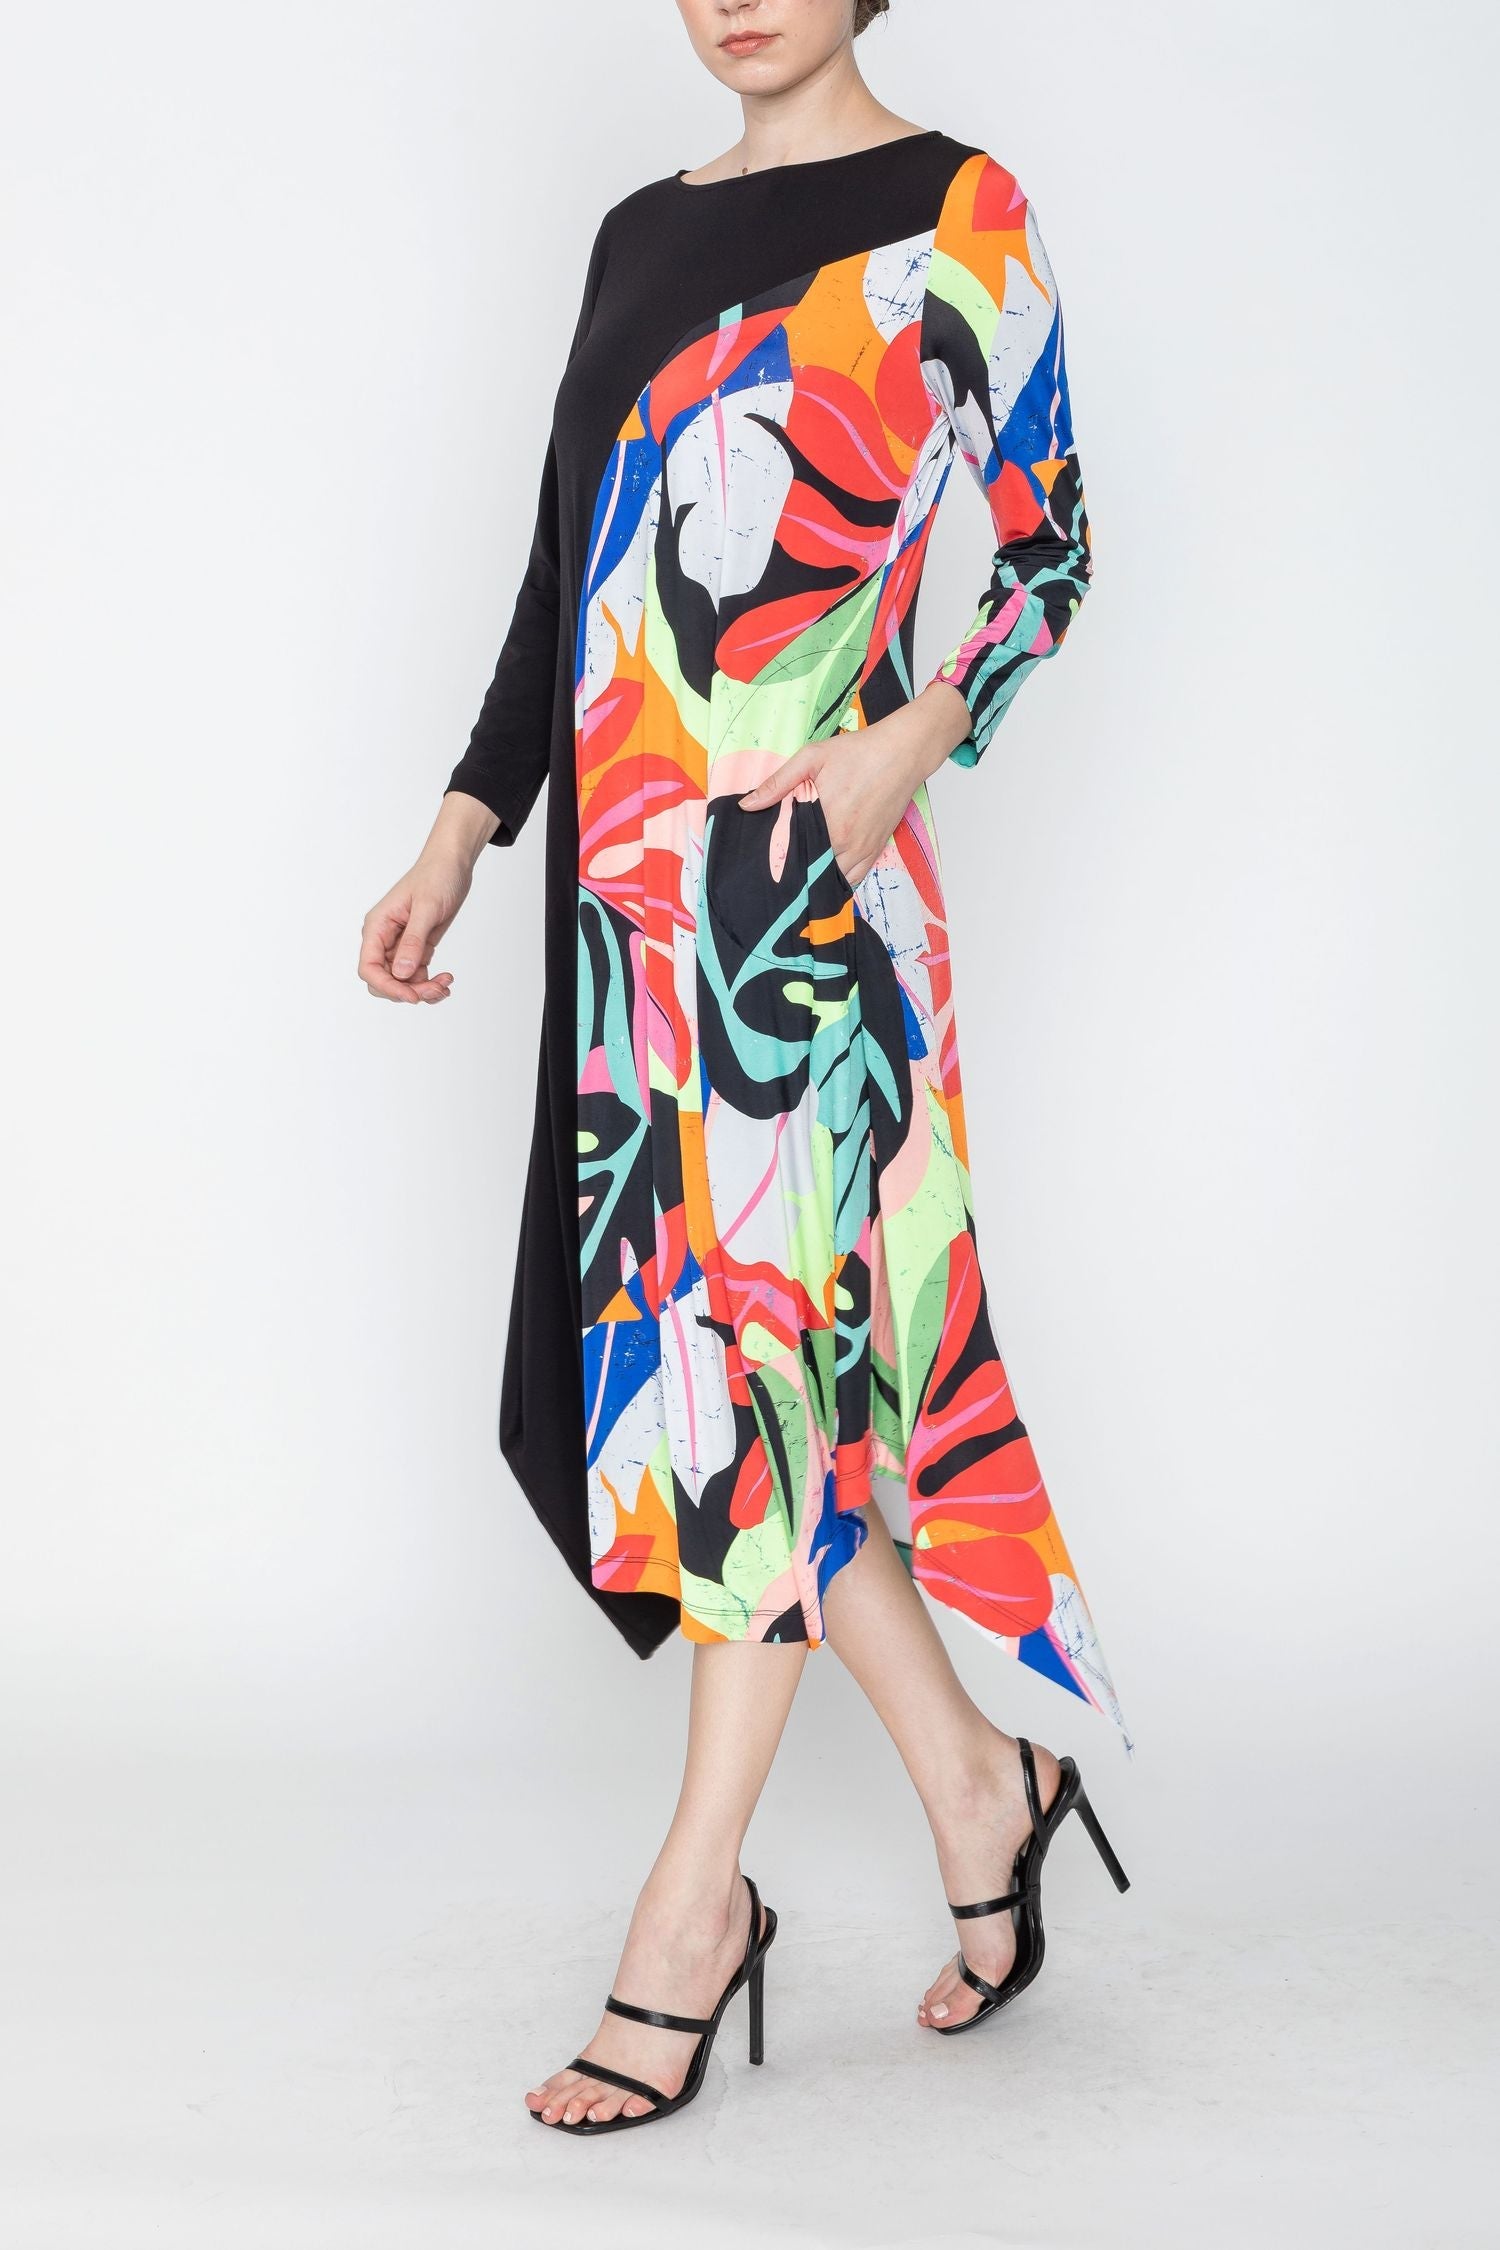 Plus Size Asymmetrical Color Block Dress - 1XL / Multi